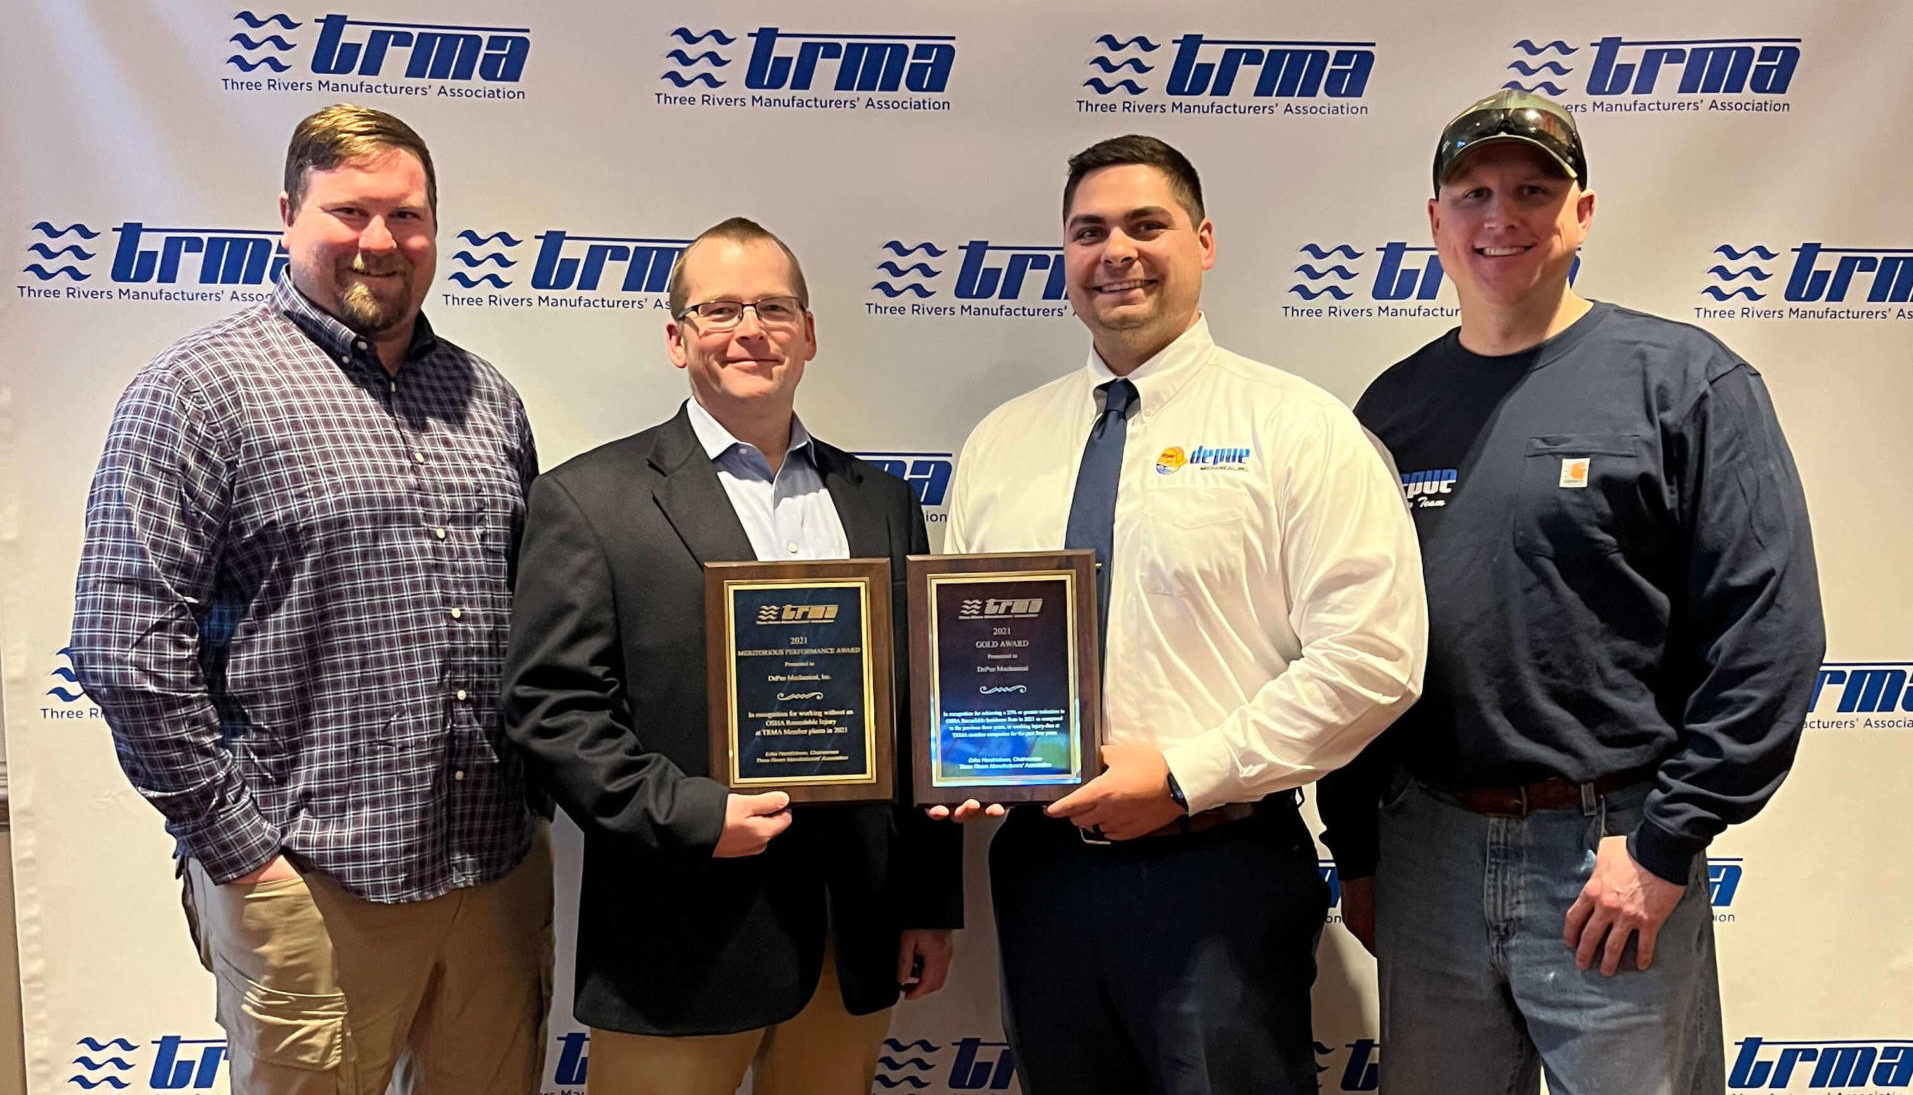 DePue Mechanical Earns Meritorious Award and Gold Award from TRMA